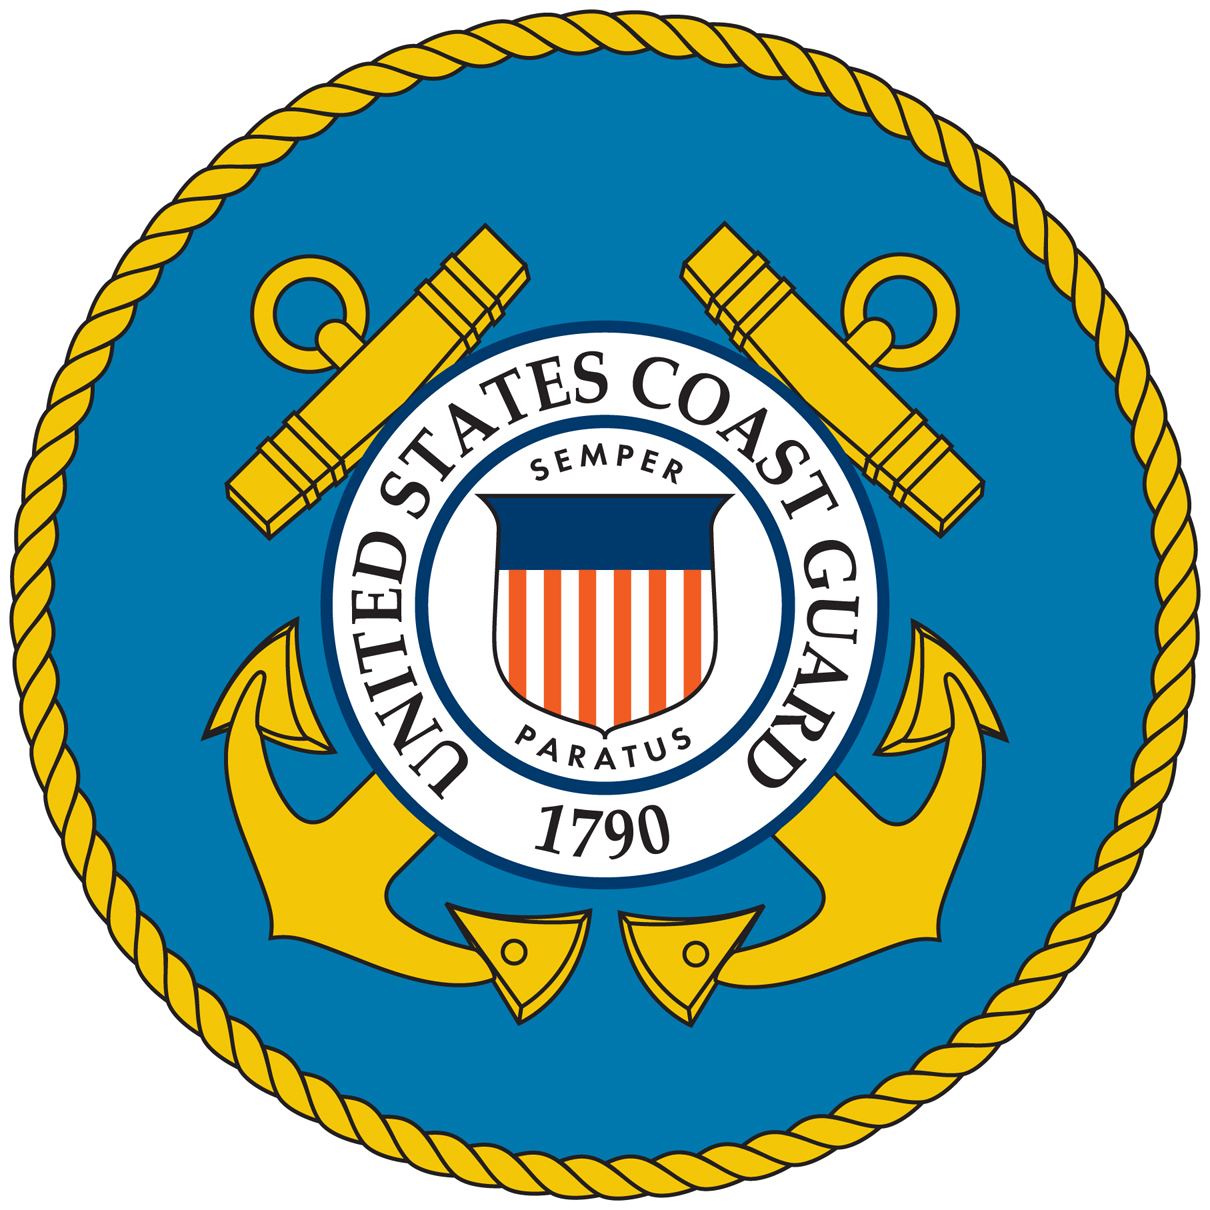 U.S. Coast Guard: This is an image of the United States Coast Guard logo.